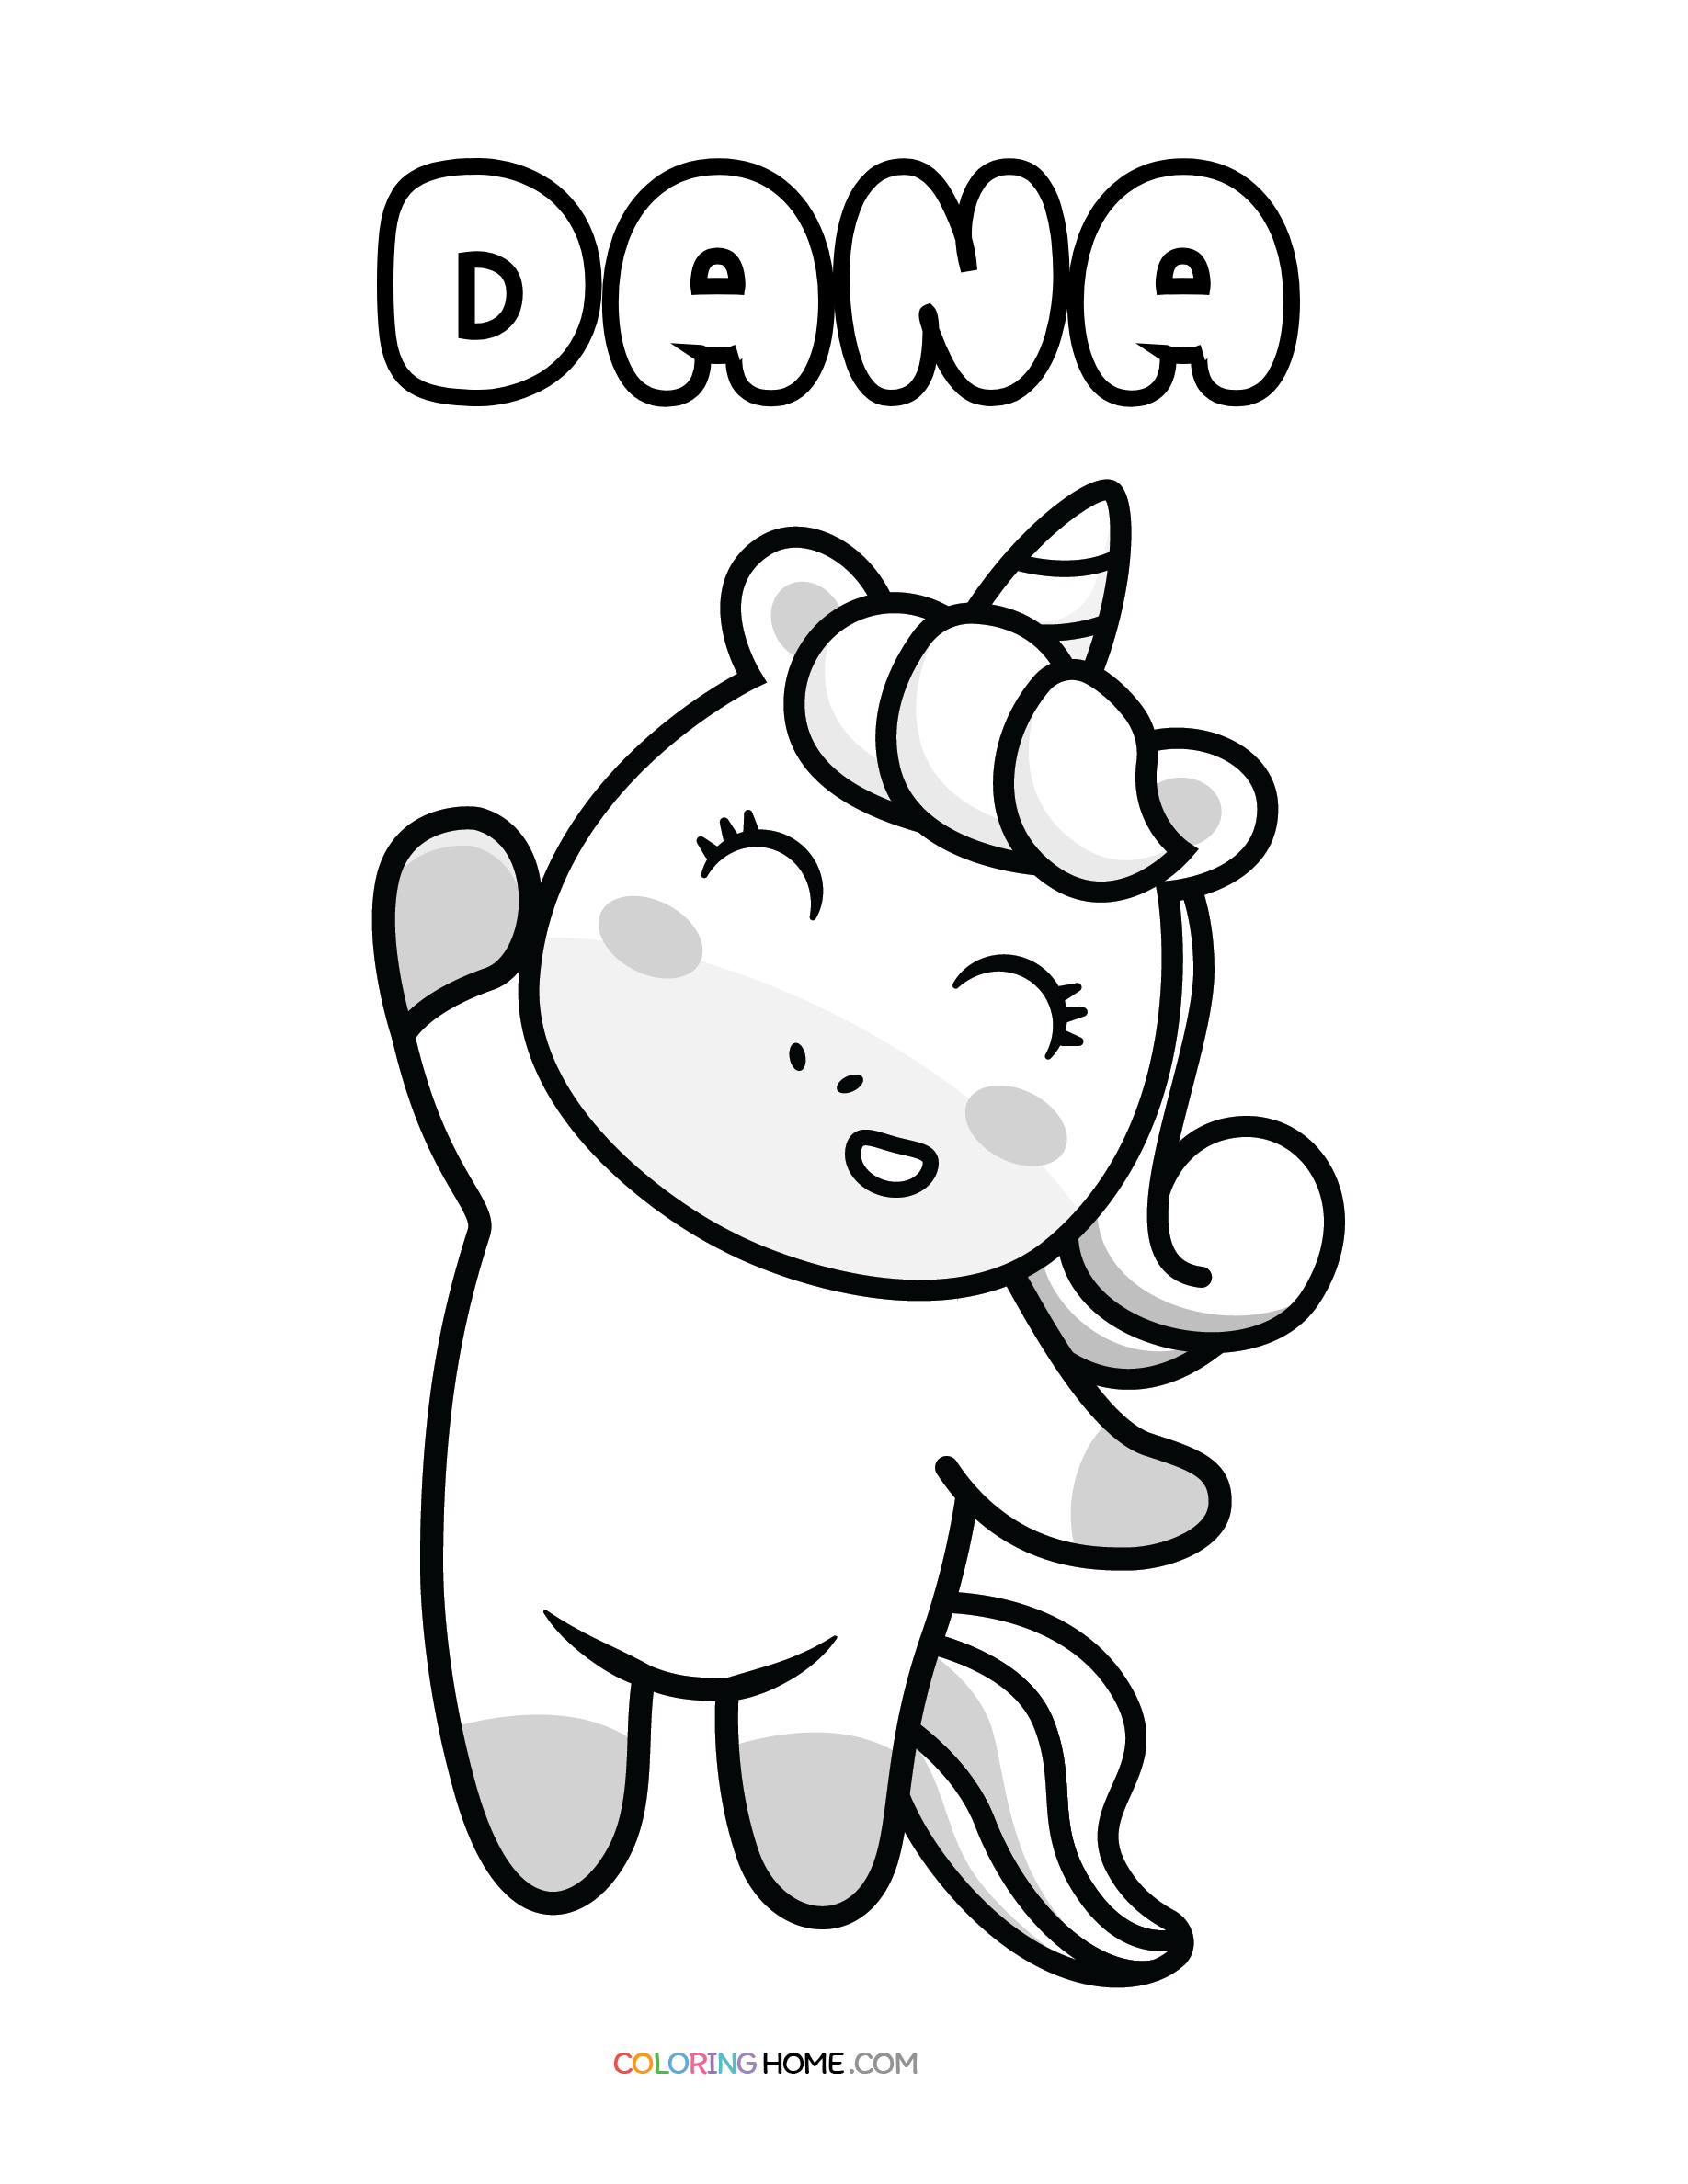 Dana unicorn coloring page